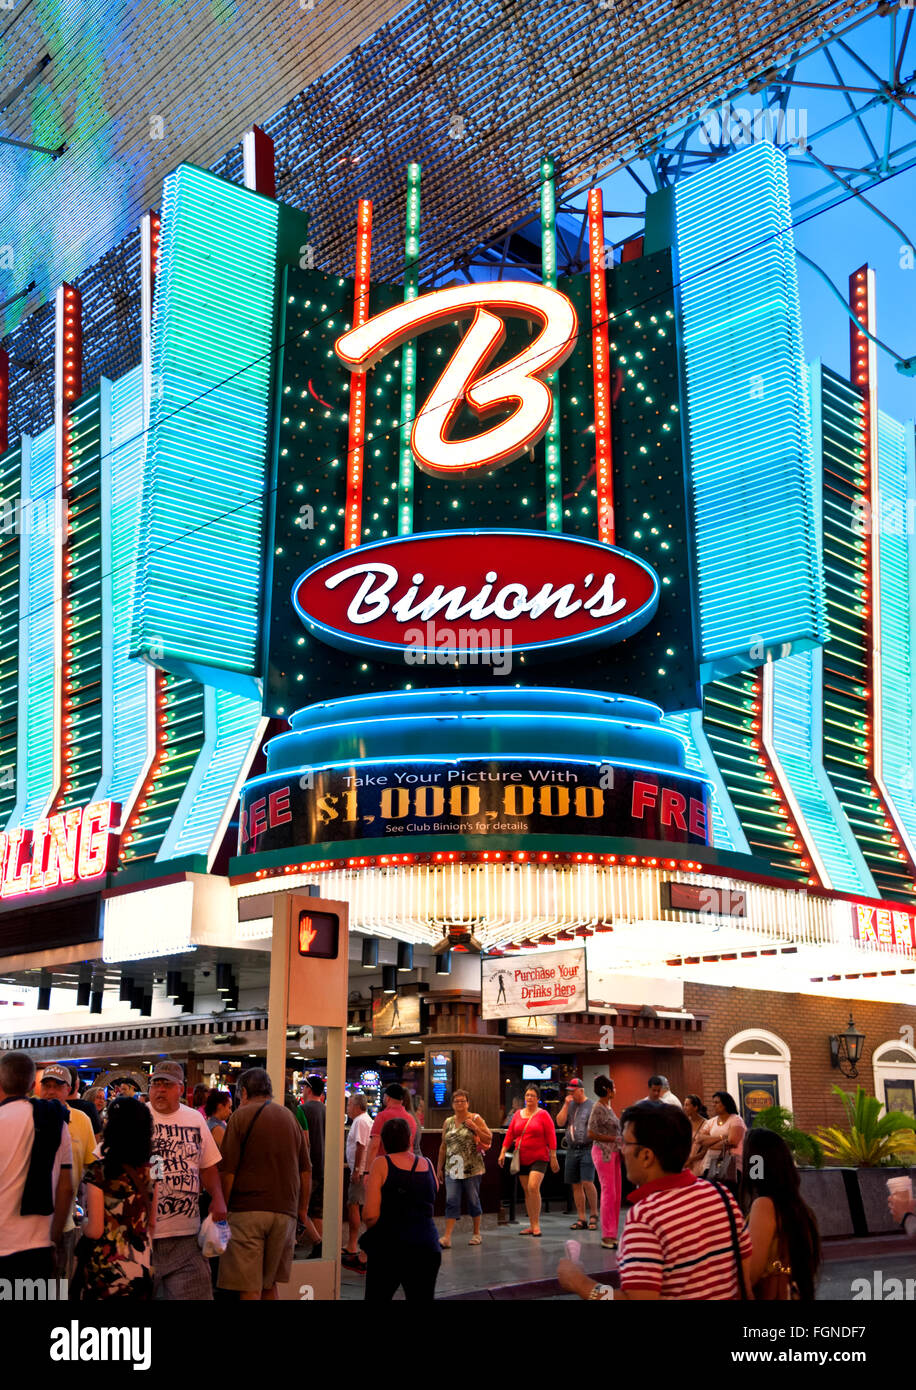 Le Binion's Casino Fremont street, Las Vegas "Fremont Street Experience".casino, foule Banque D'Images